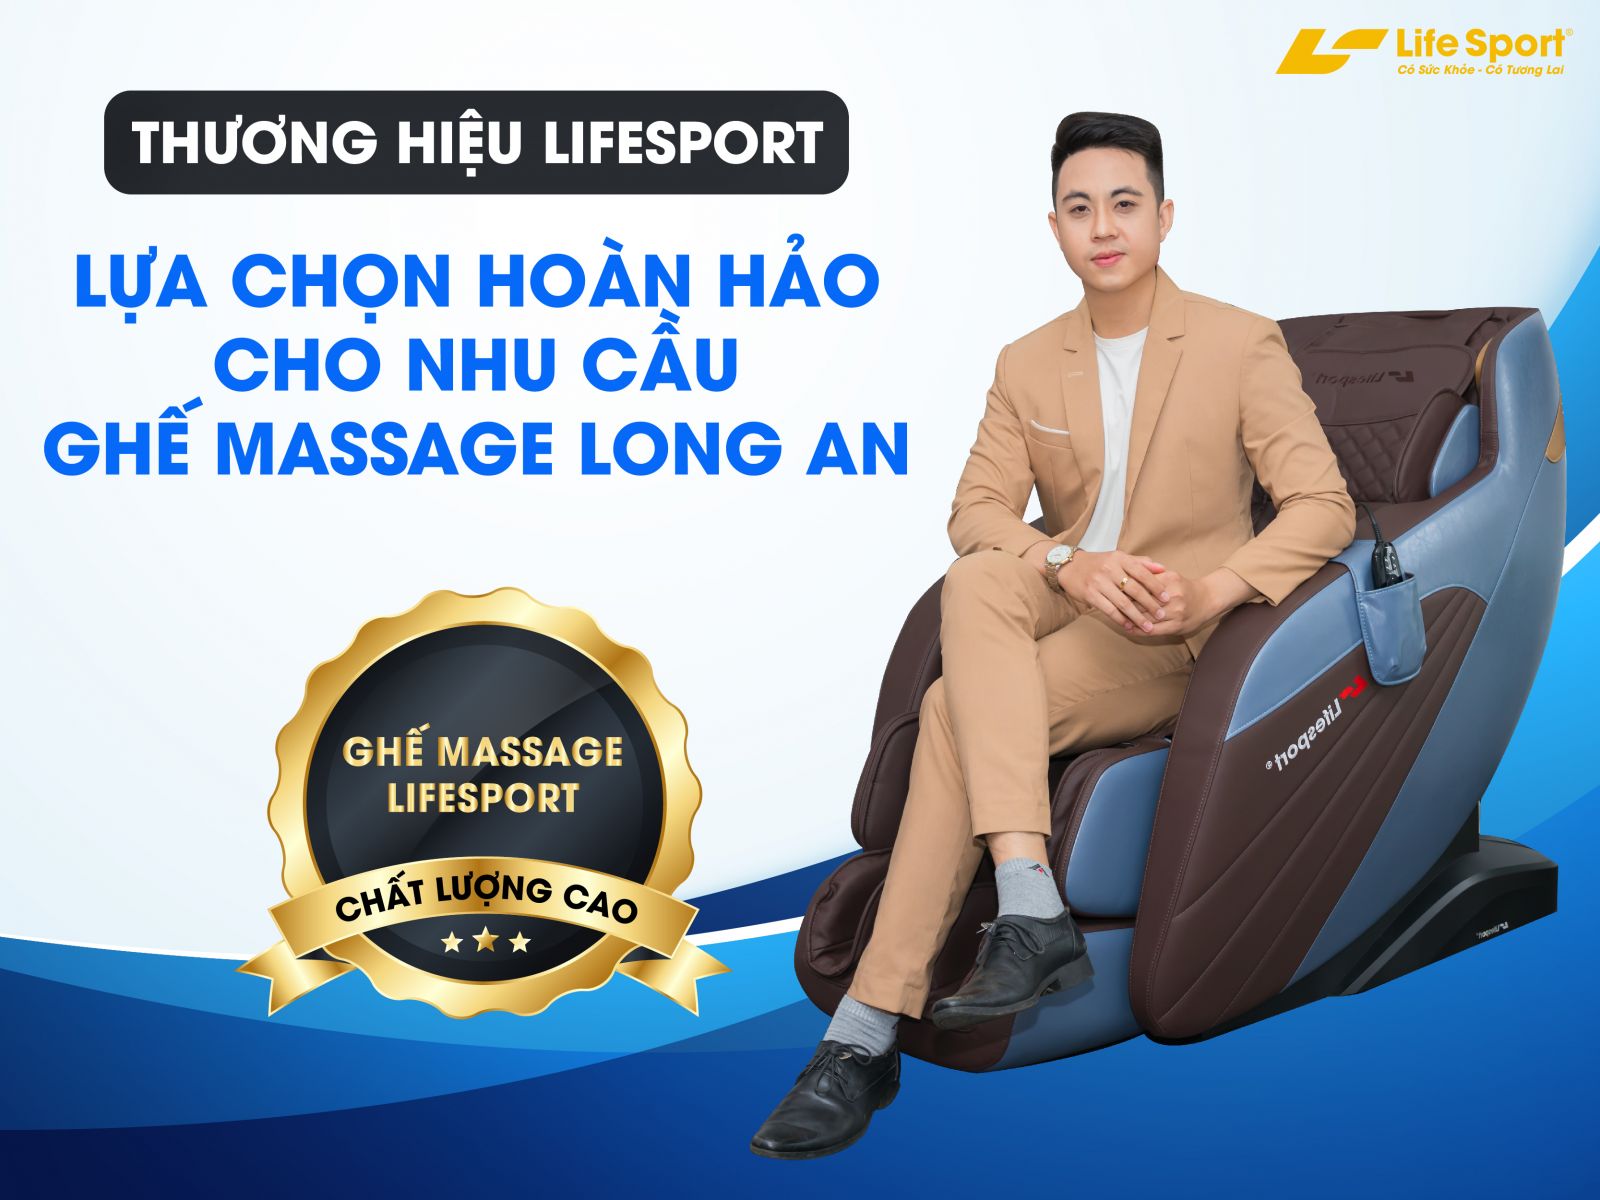 bai ghe massage tai nha oder life sport 7